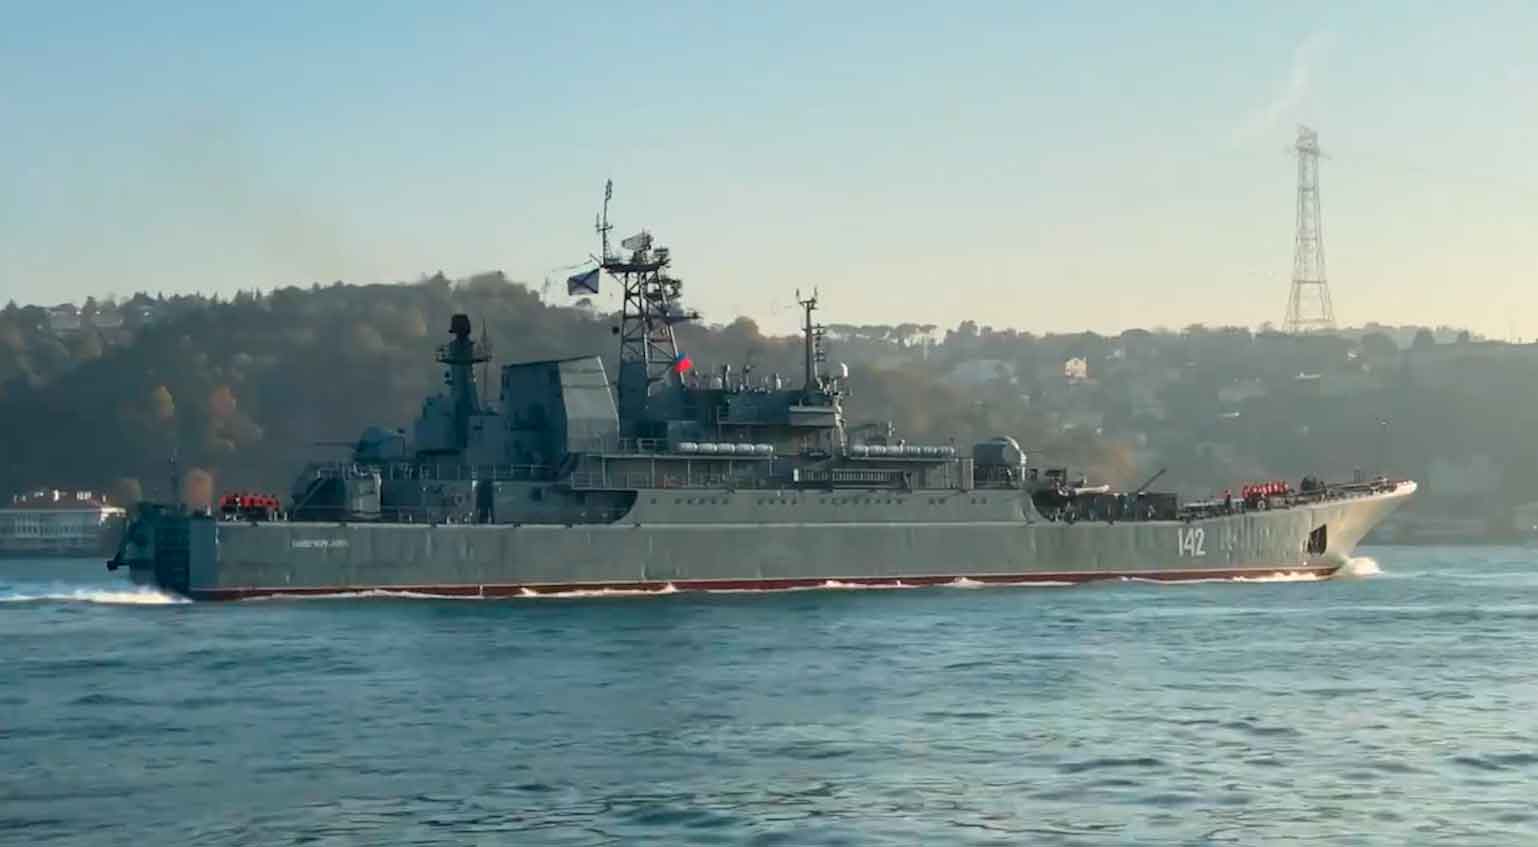 Video: Ukraina Hancurkan Kapal Perang Rusia Besar Lainnya di Krimea. Foto dan Video: Telegram @operativnoZSU / Twitter @visegrad24